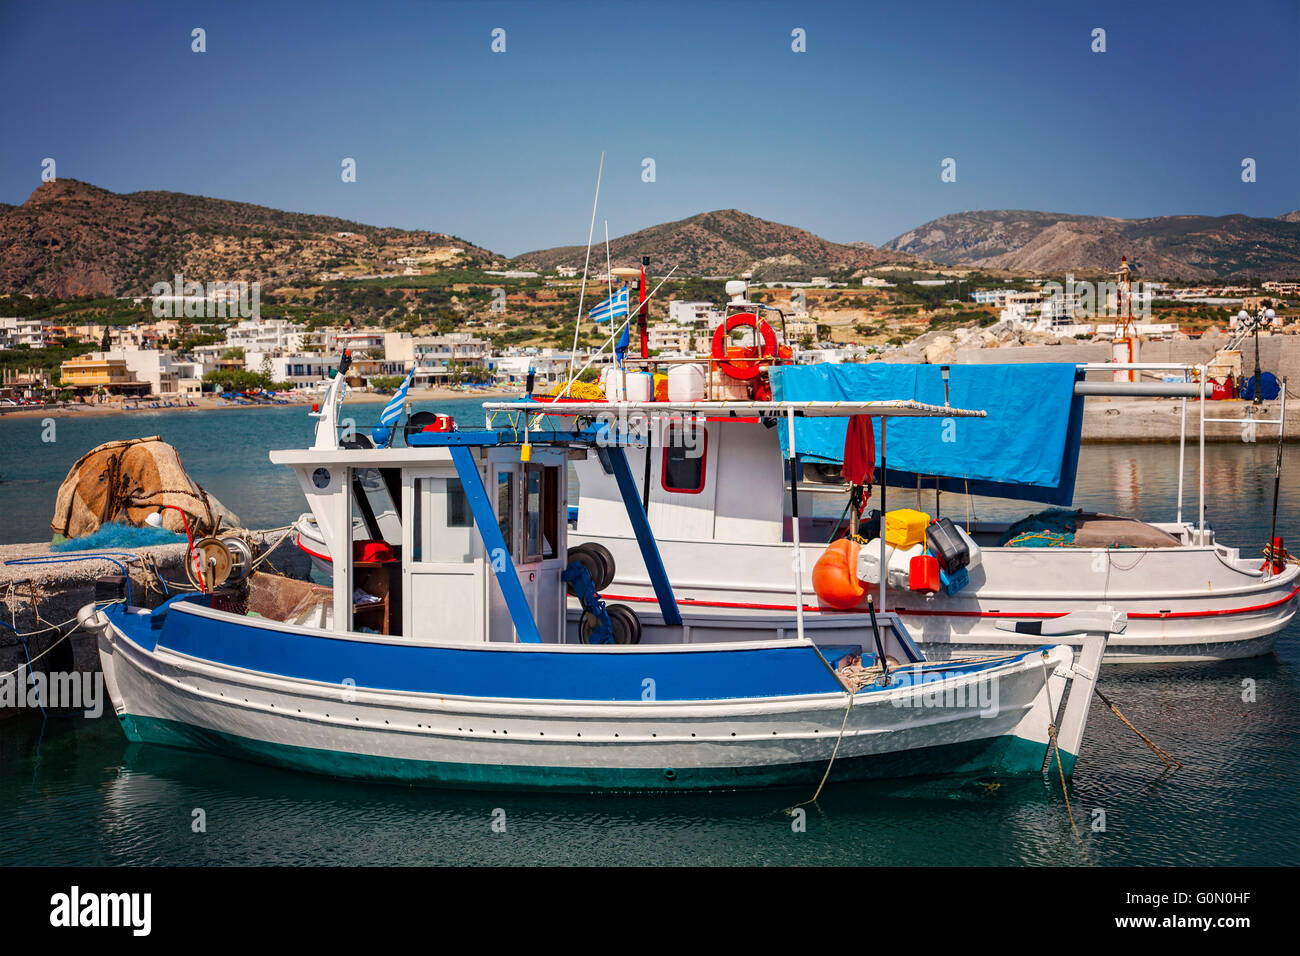 Image of small fishing boats in the village port. Makrigialos, Crete. Stock Photo